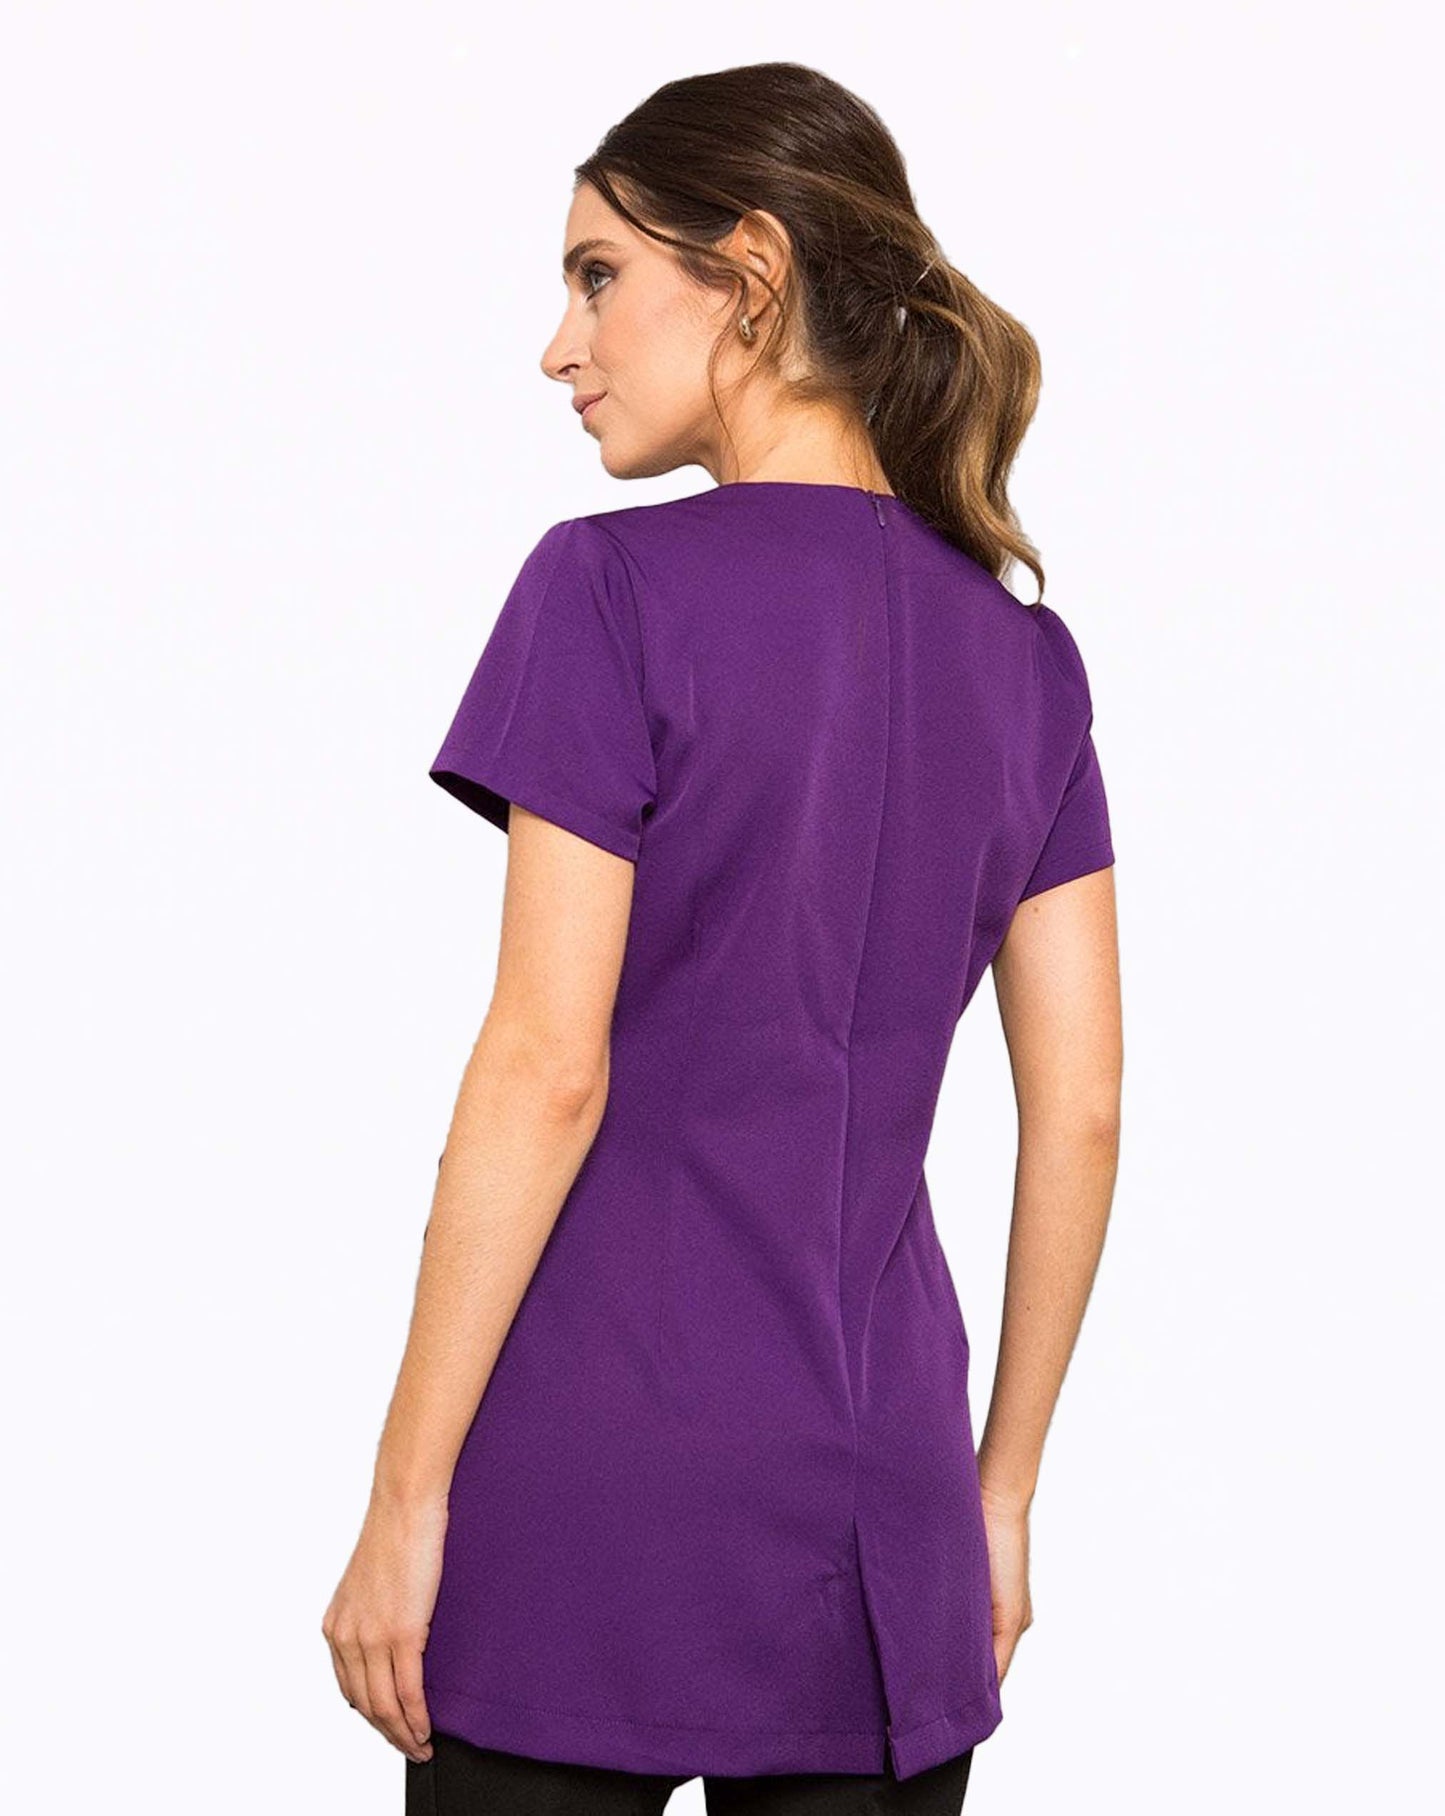 Tranquility Asymmetric Beauty Tunic - Purple (Superior 4-Way Stretch)